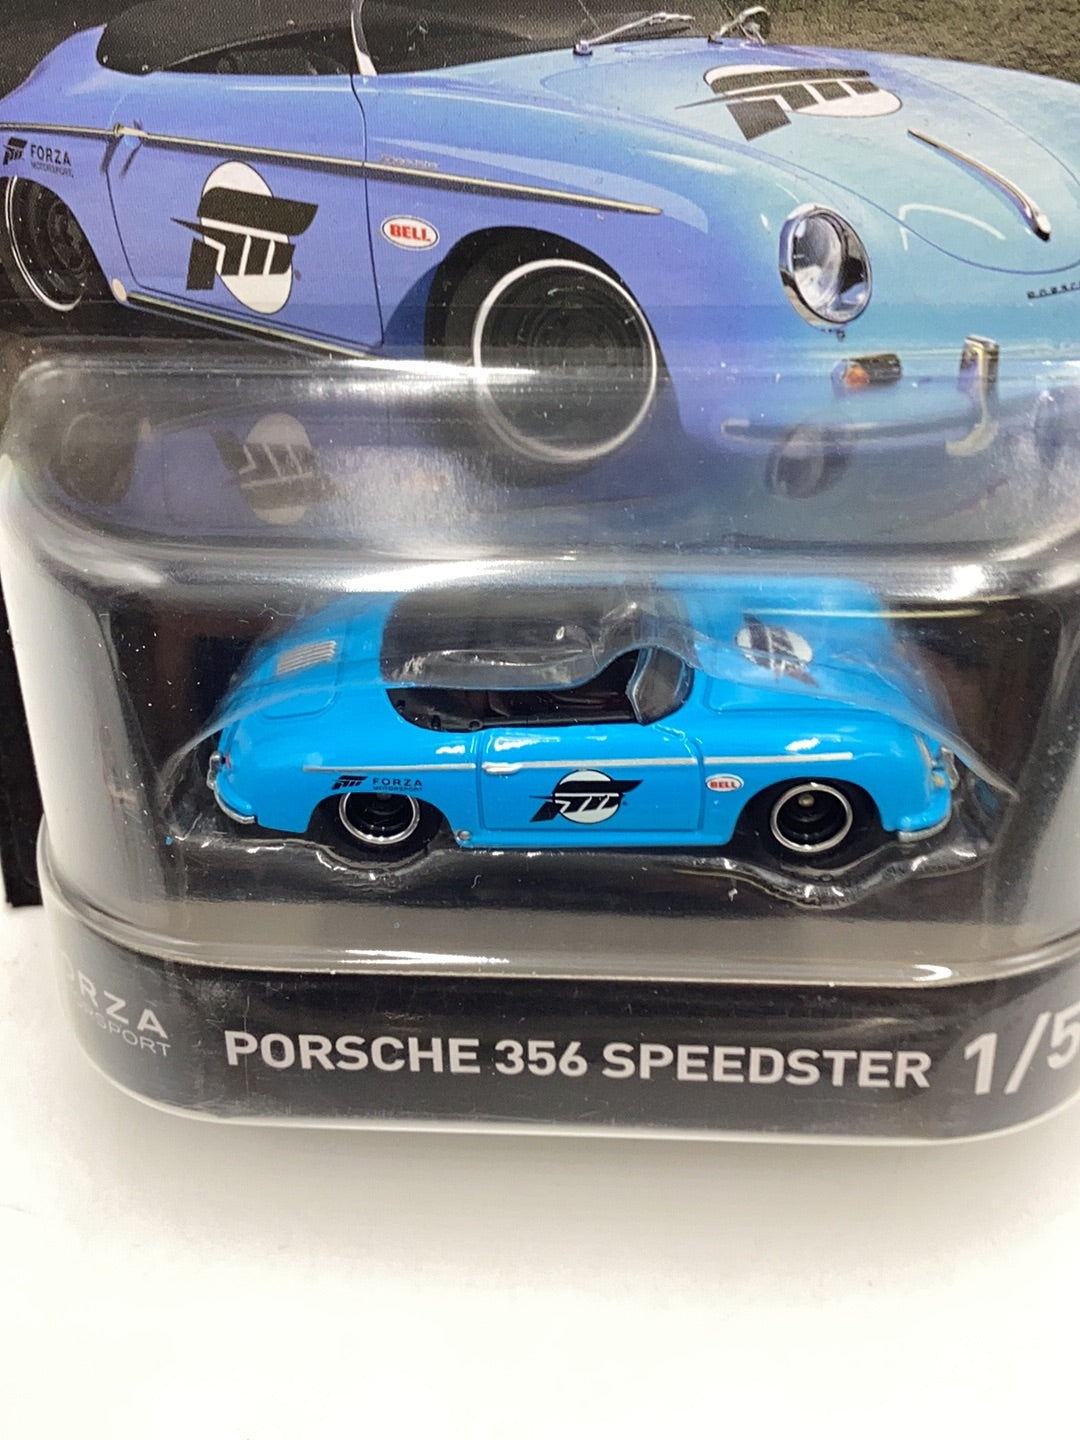 Hot Wheels retro entertainment Forza Porsche 356 Speedster 1/5